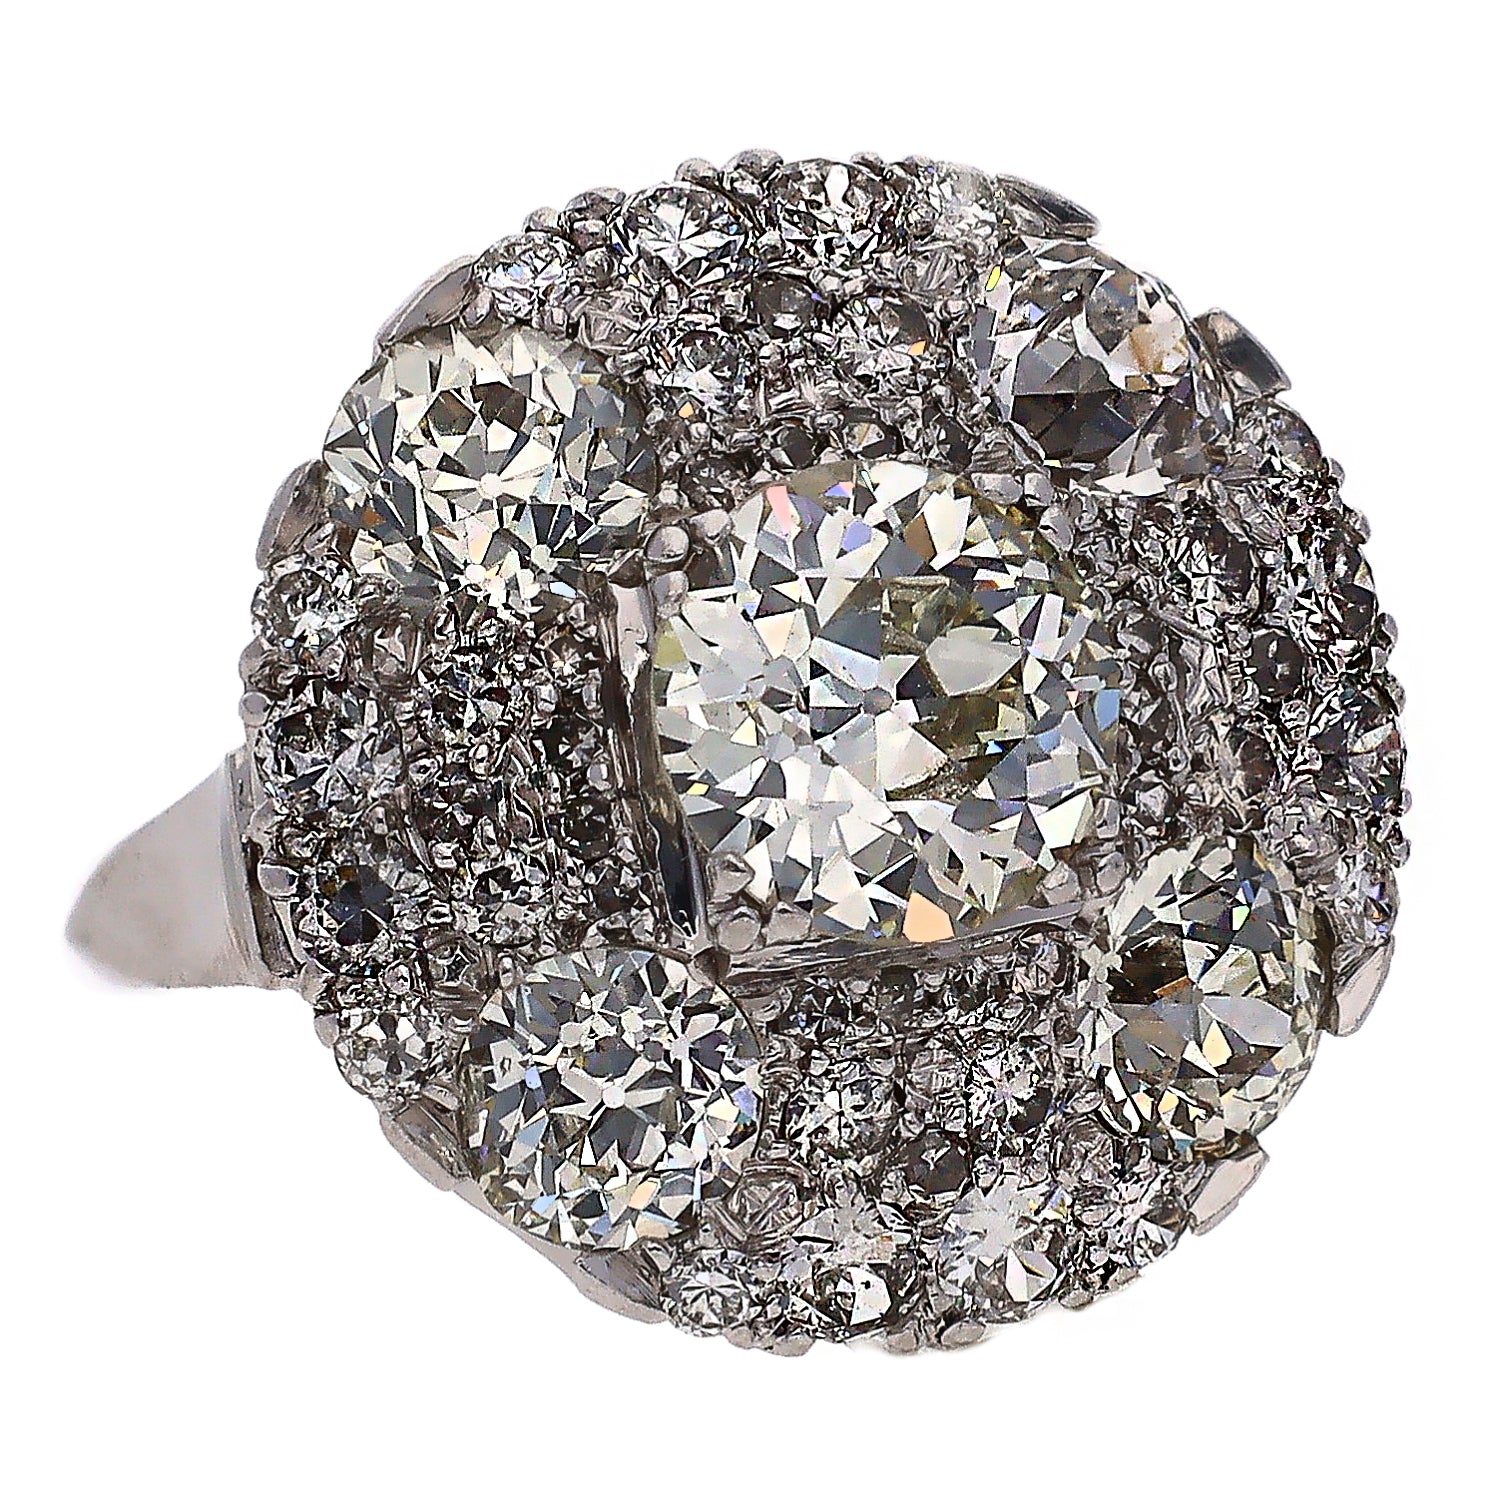 Vintage Platinum and Diamond Engagement/Fashion Ring